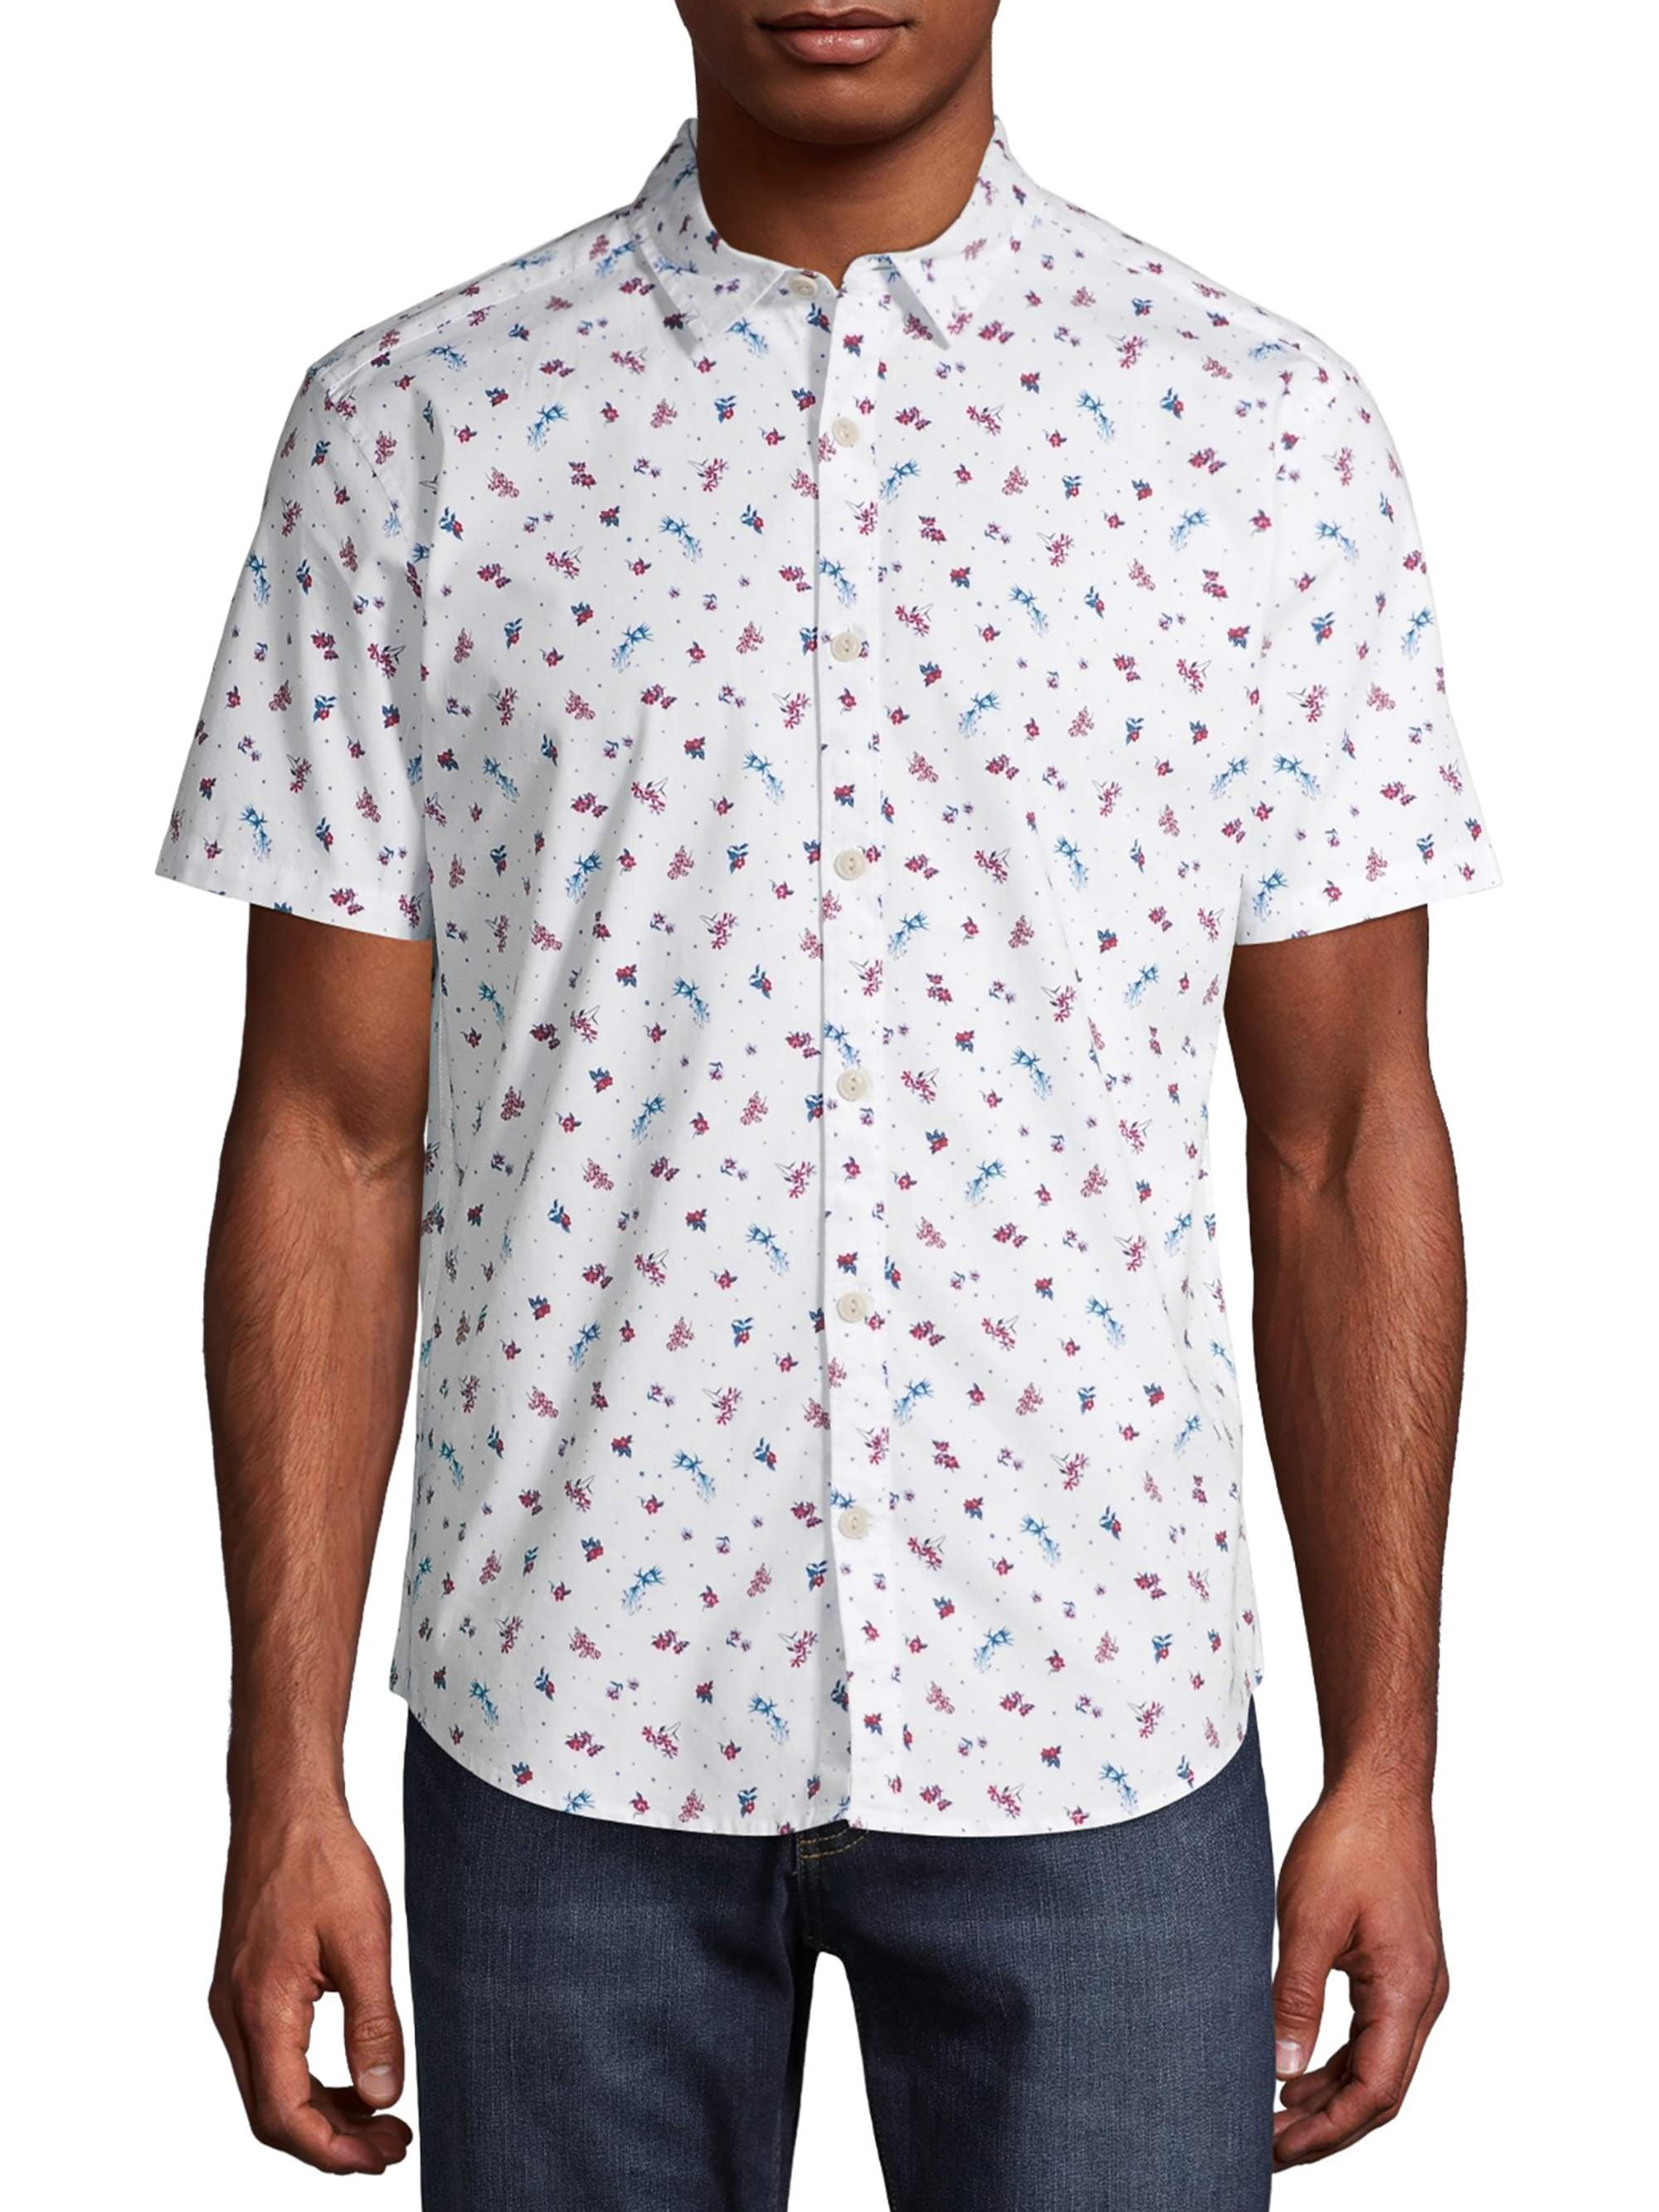 GenericMen See Through Button up Long Sleeve Flower Pattern Mesh Shirt